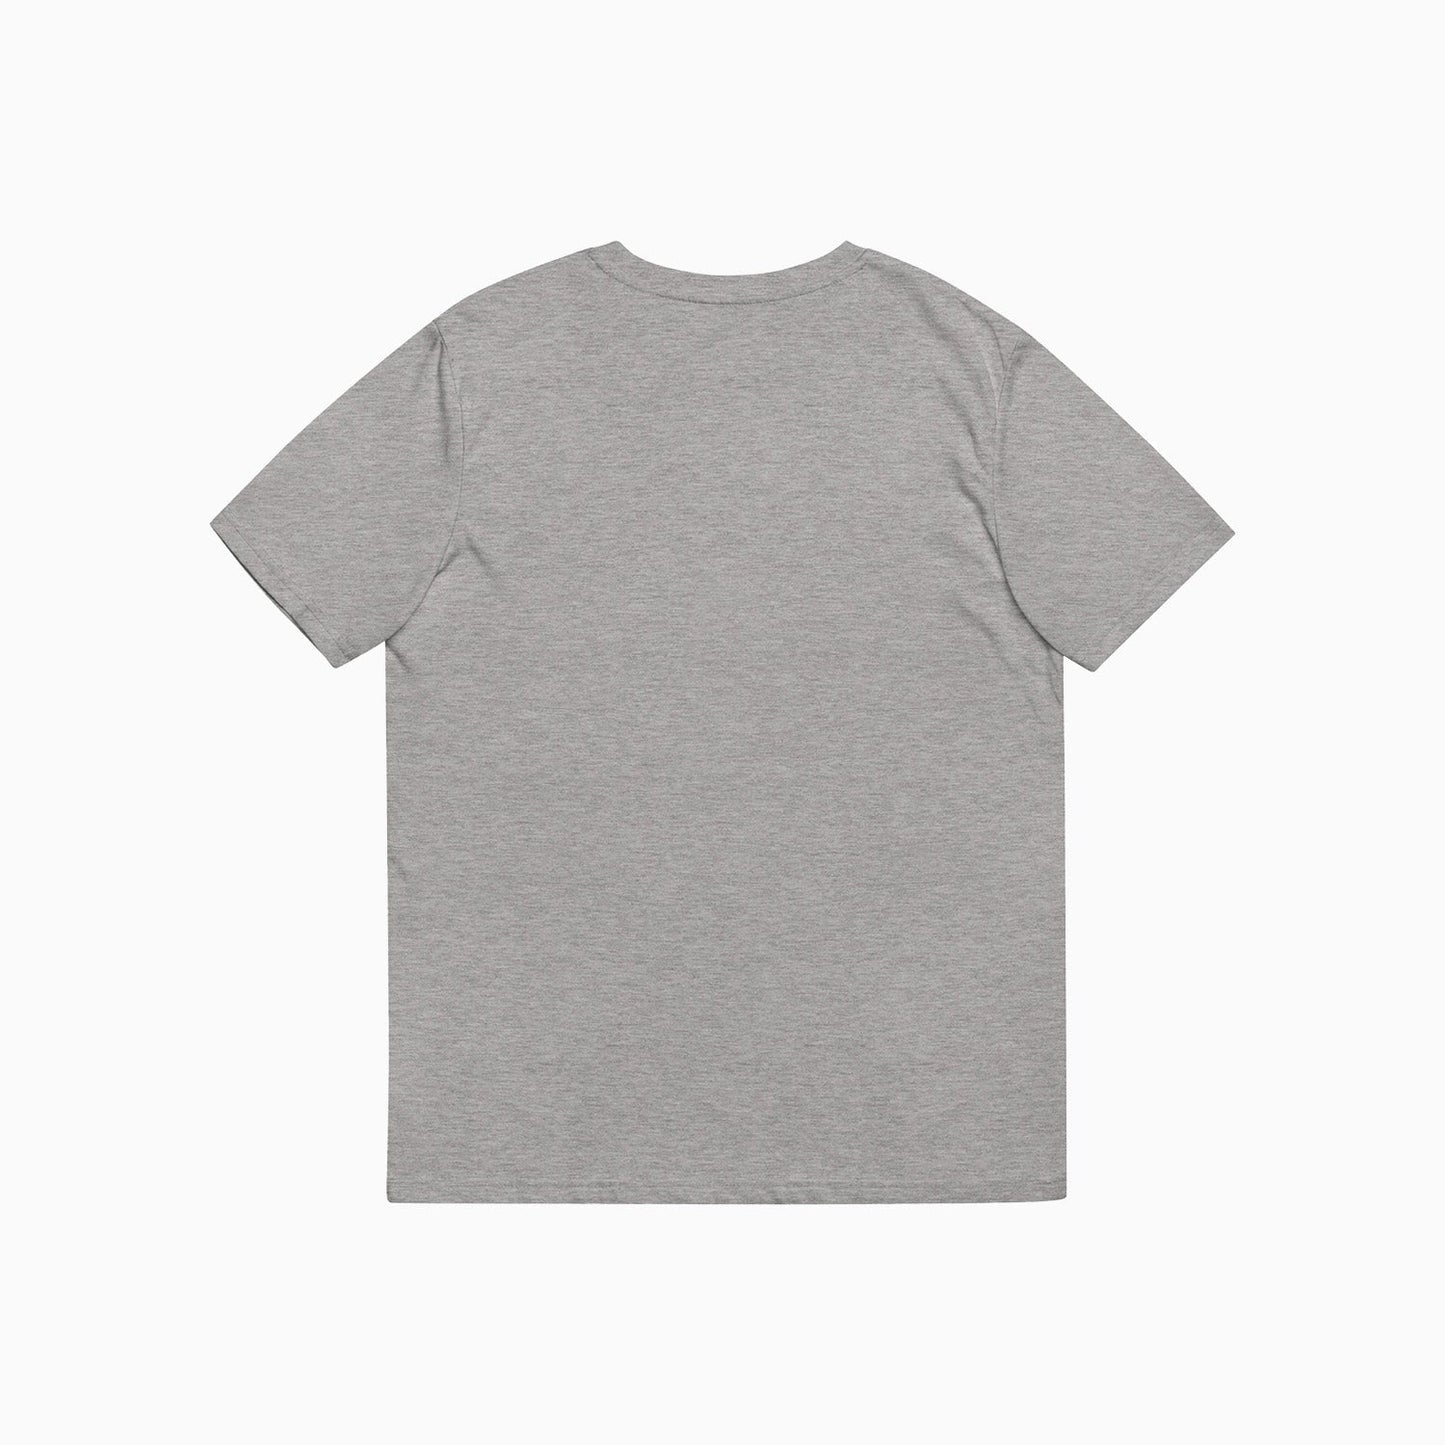 Men's Tie Dye Graphics Short Sleeve T-Shirt